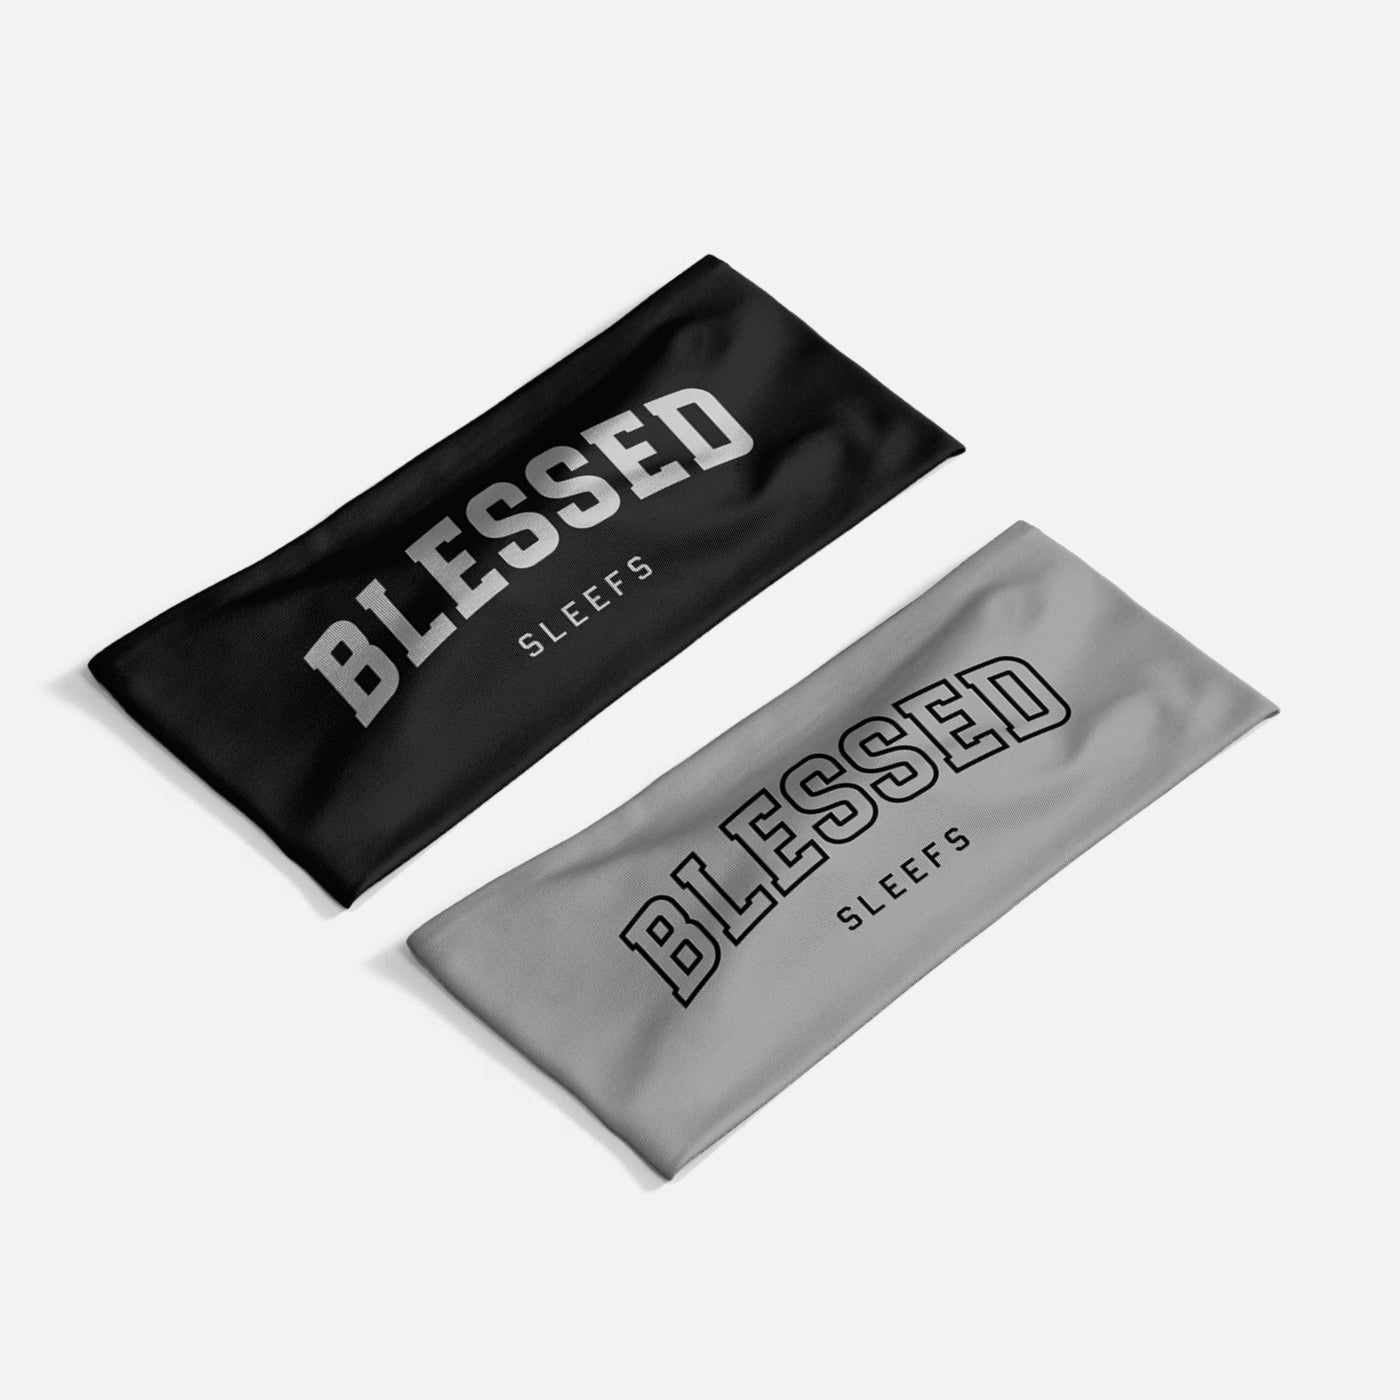 Blessed Headband 2-Pack